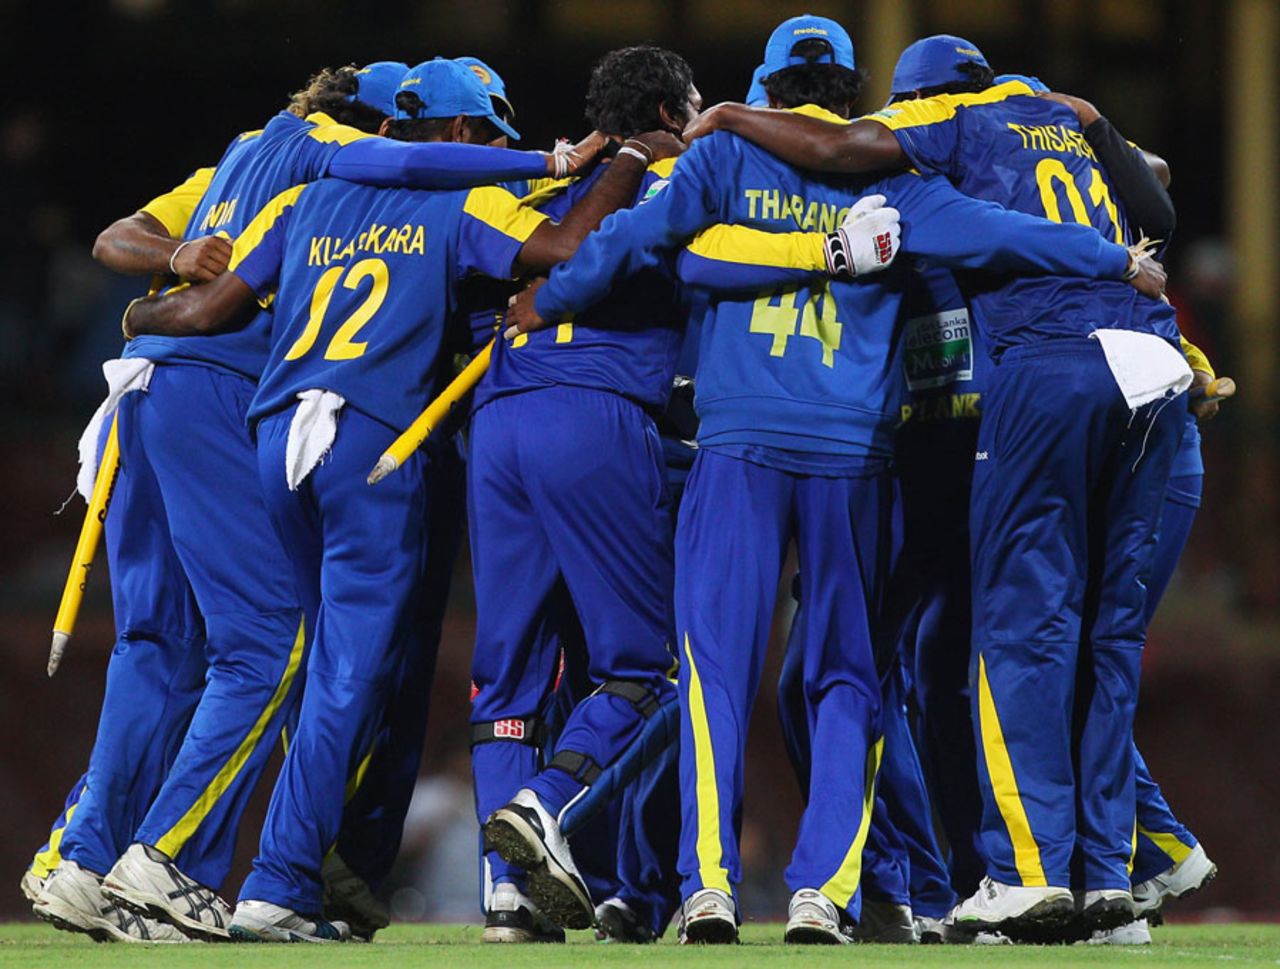 The Sri Lankan team celebrates winning their ODI series against Australia, Australia v Sri Lanka, 2nd ODI, Sydney, November 5, 2010